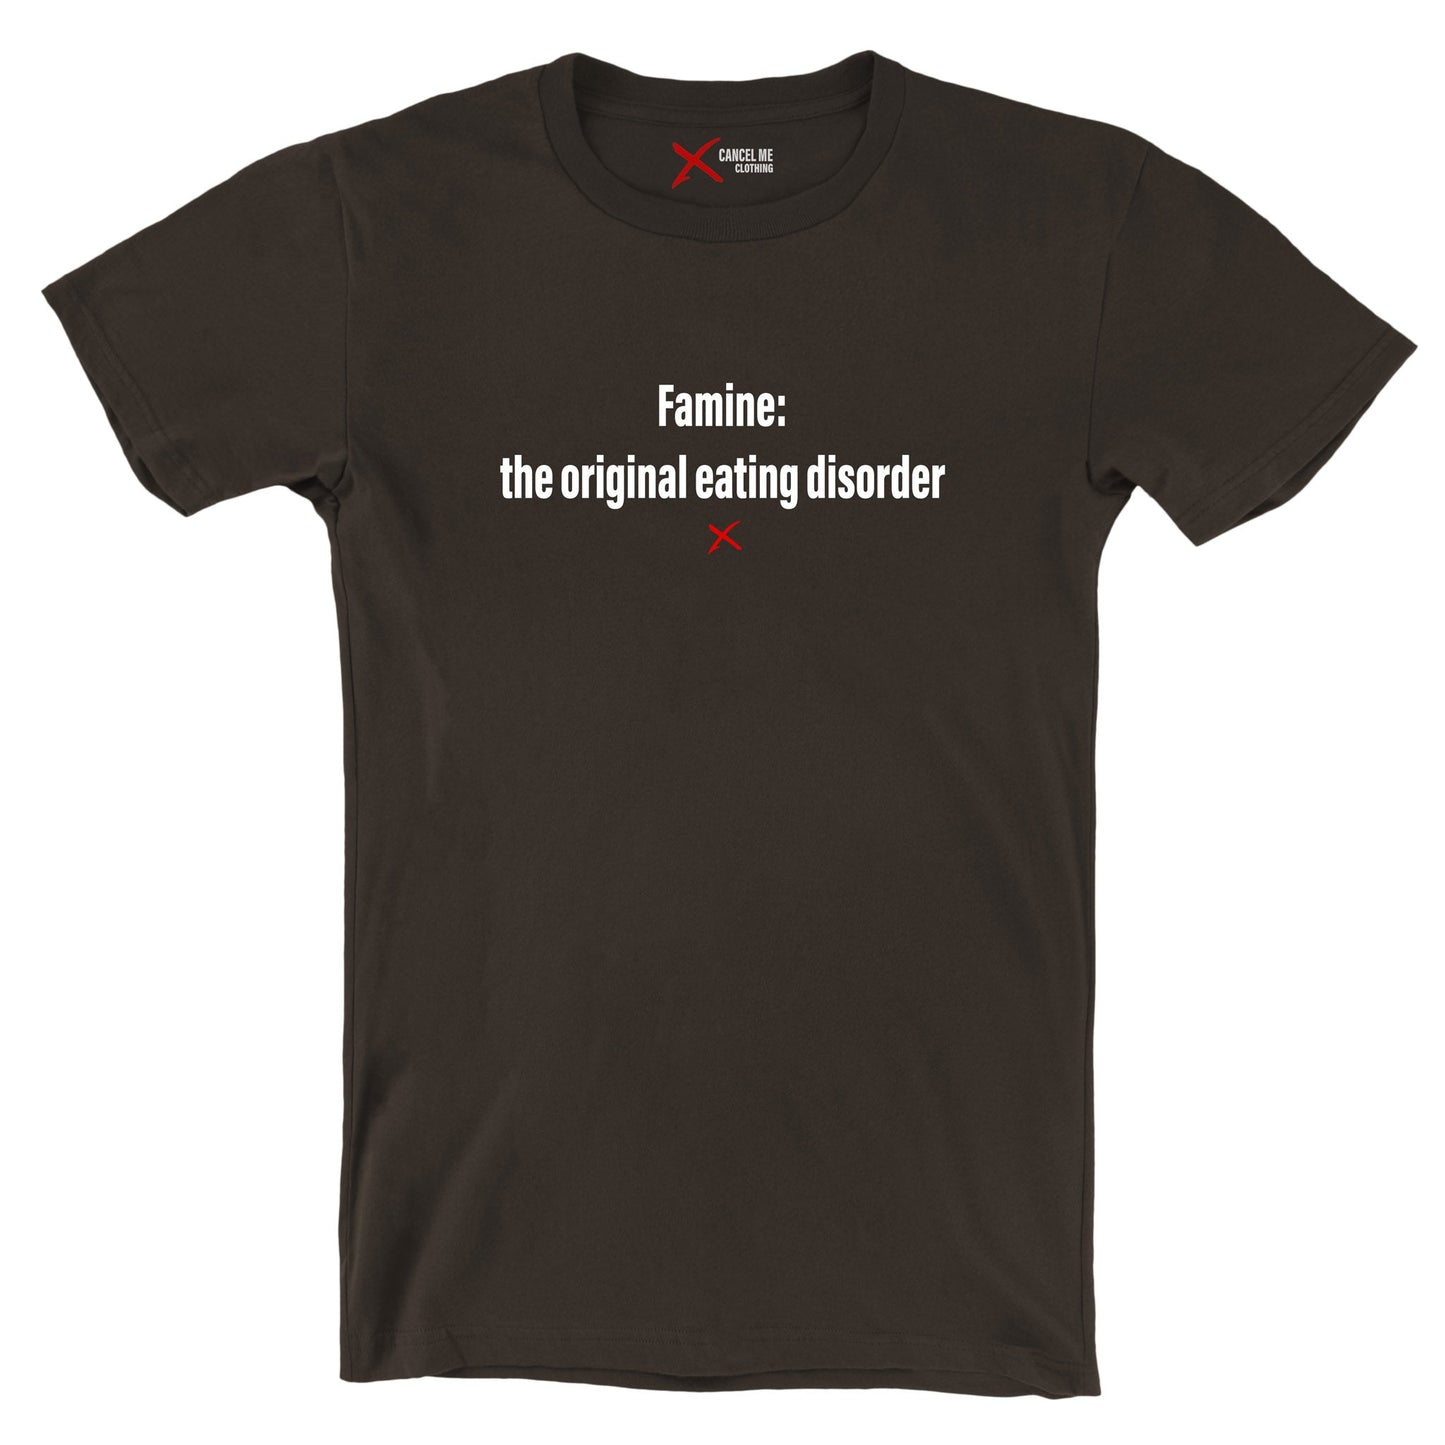 Famine: the original eating disorder - Shirt